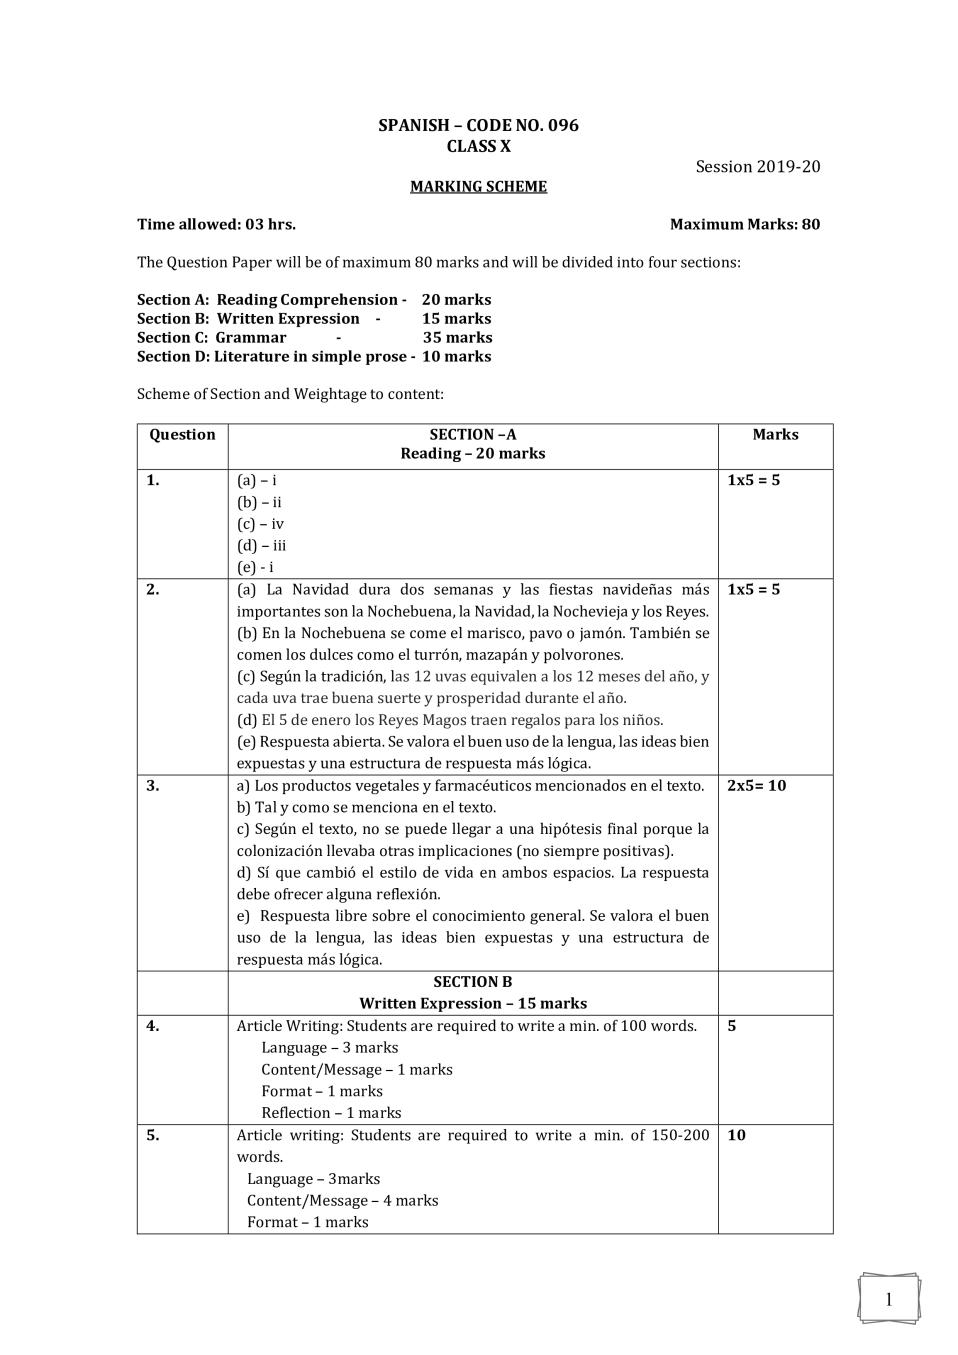 CBSE Class 10 Marking Scheme 2020 for Spanish - Page 1